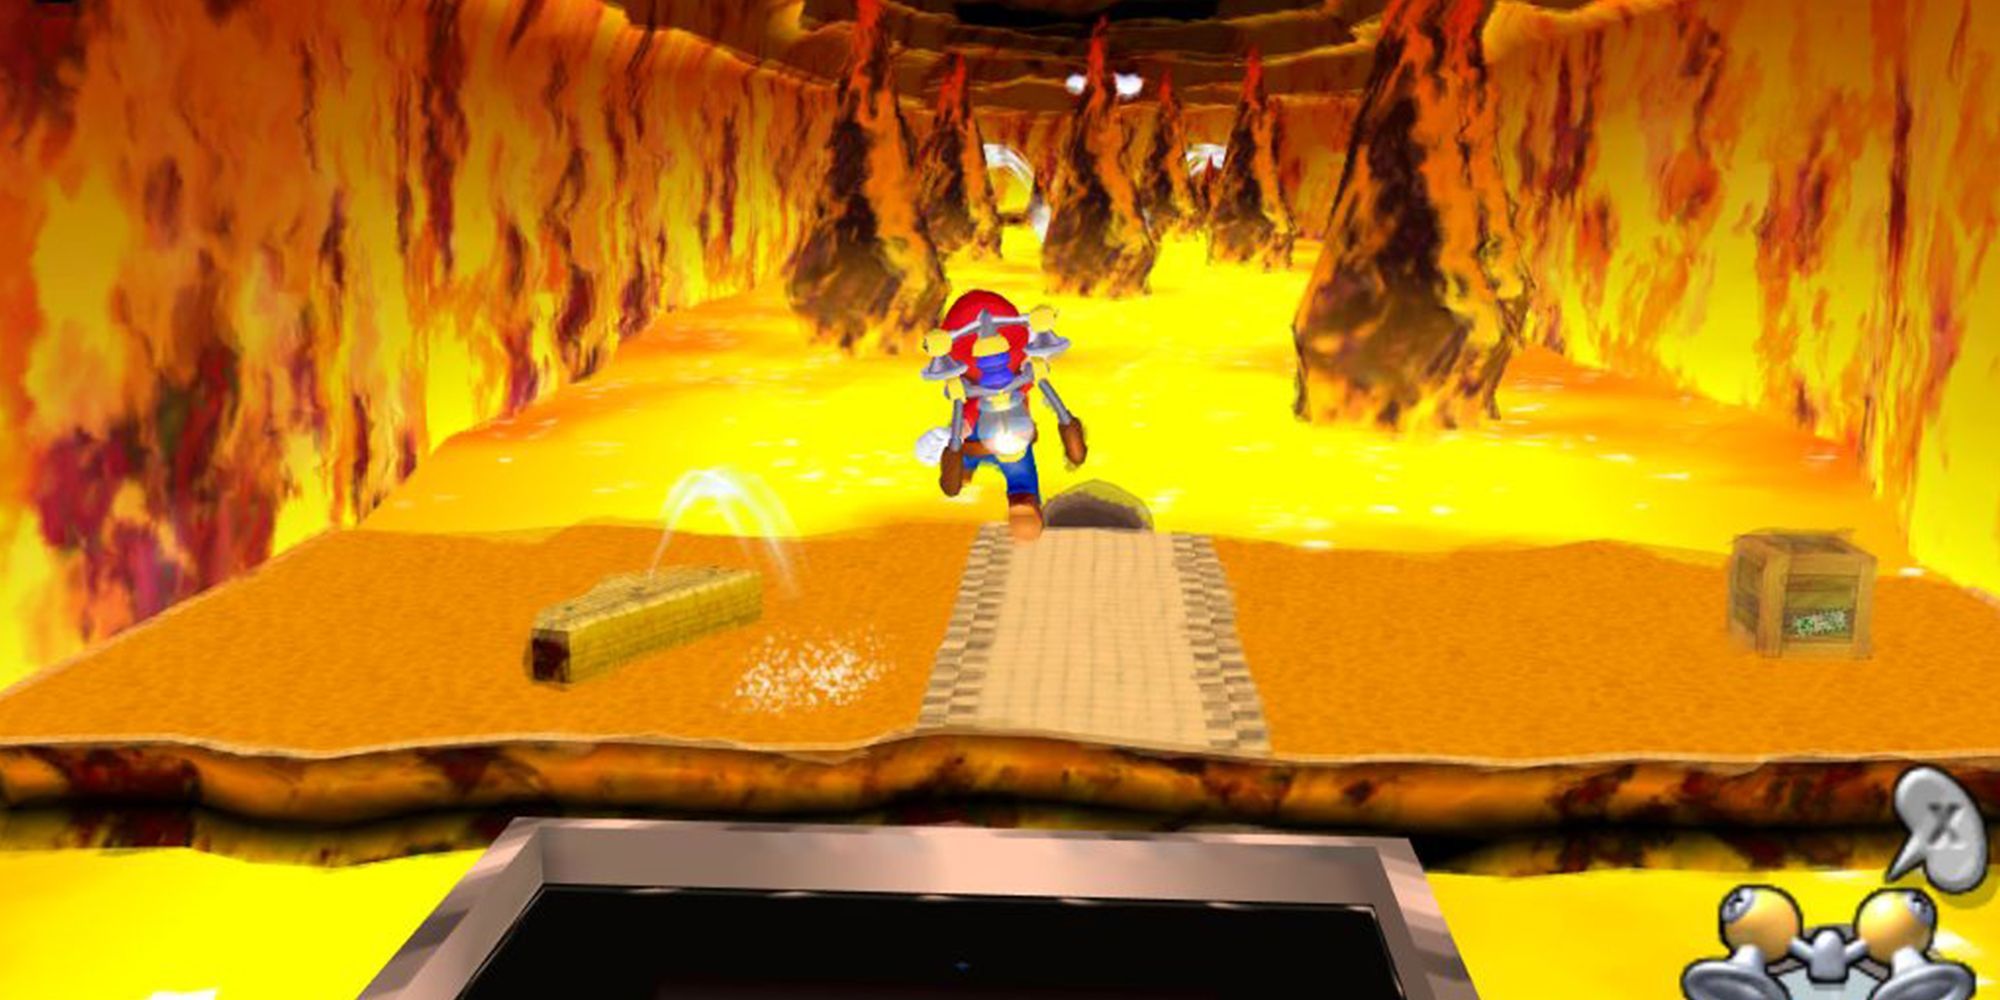 Mario traversing the lava-filled Corono Mountain